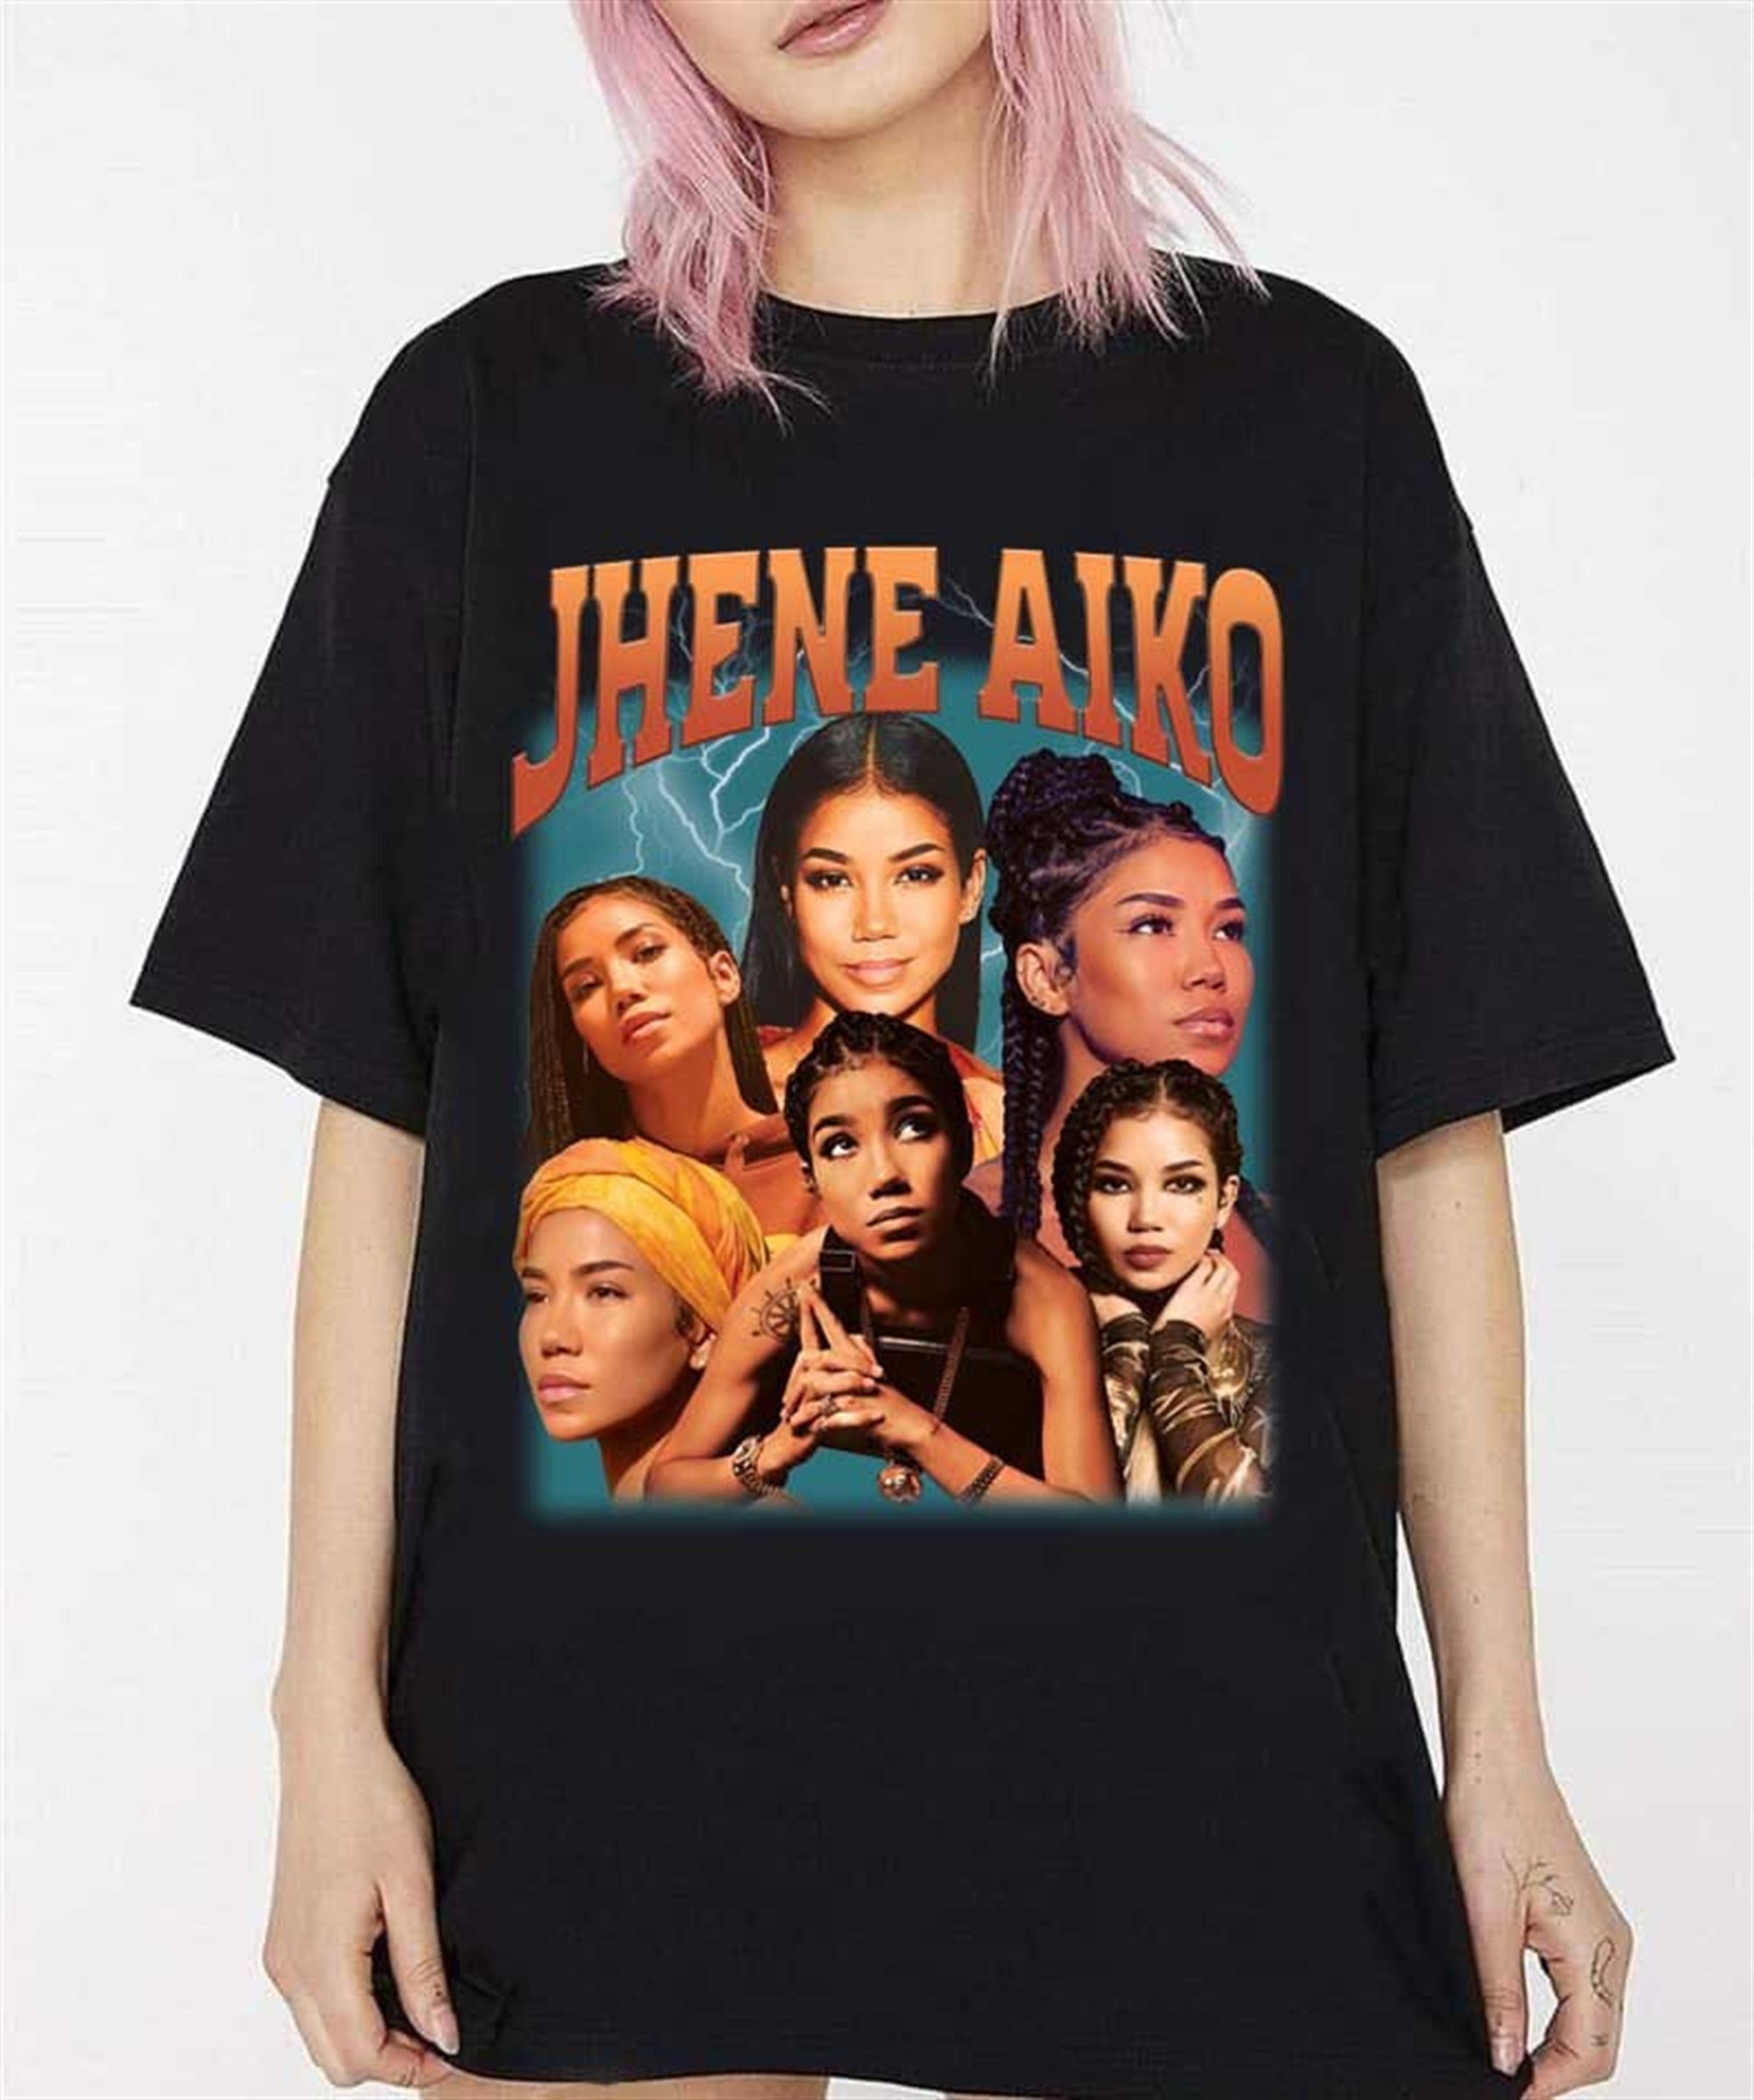 Interesting Jhene Aiko Shirt Vintage 90s Shirt Rapper Vintage Tee Retro Queen Of Rnb Shirt Jhene Aiko Chilombo Shirt Rap Hip Hop 90s Shirt Ha 